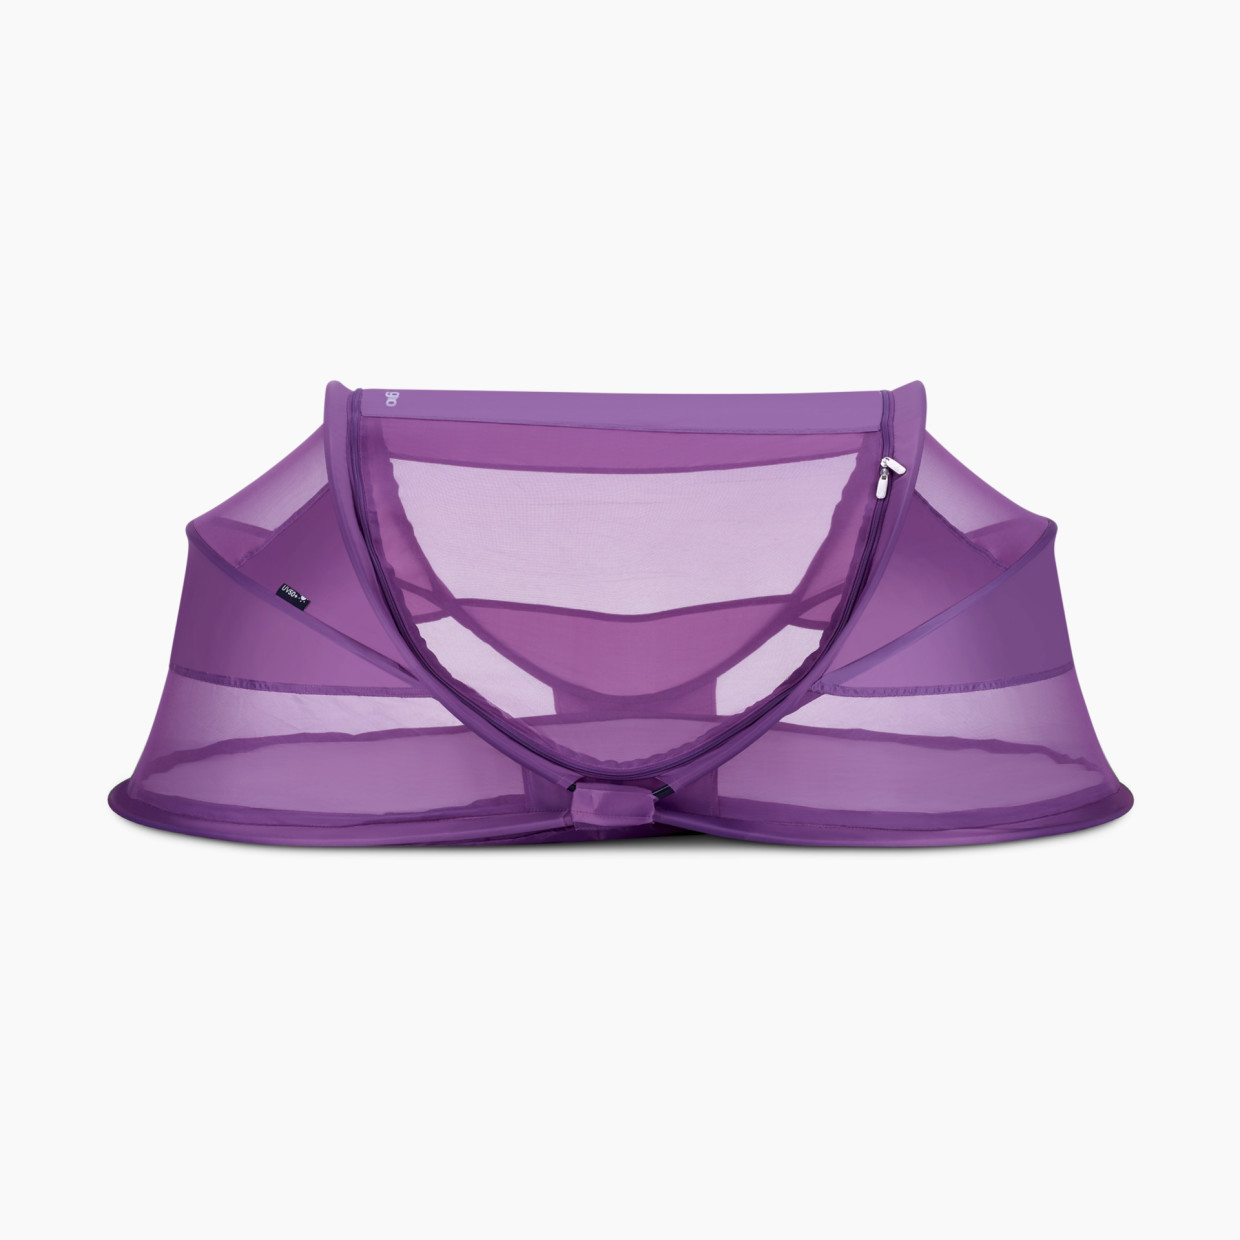 Joovy Gloo Portable Travel Tent - Sunset Purple, Regular.